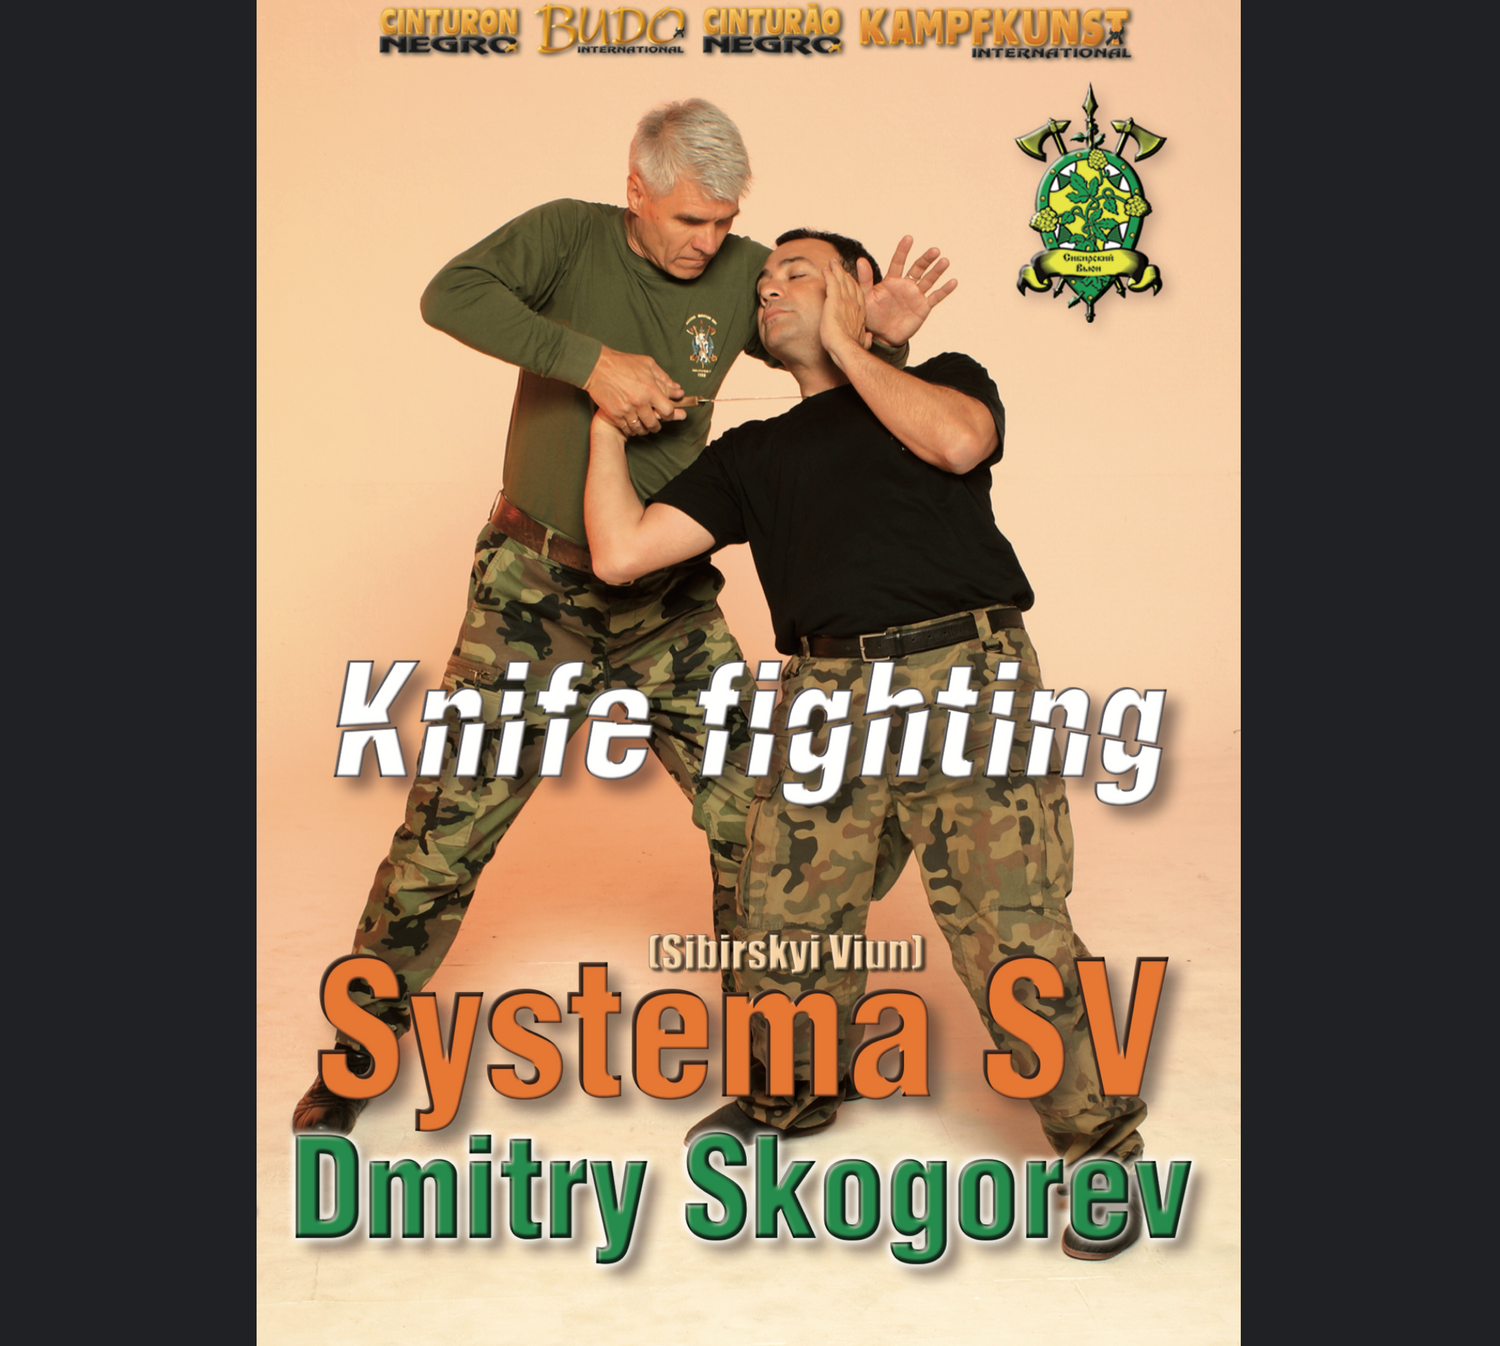 RMA Systema SV Lucha con cuchillos Dmitry Skogorev (bajo demanda) 